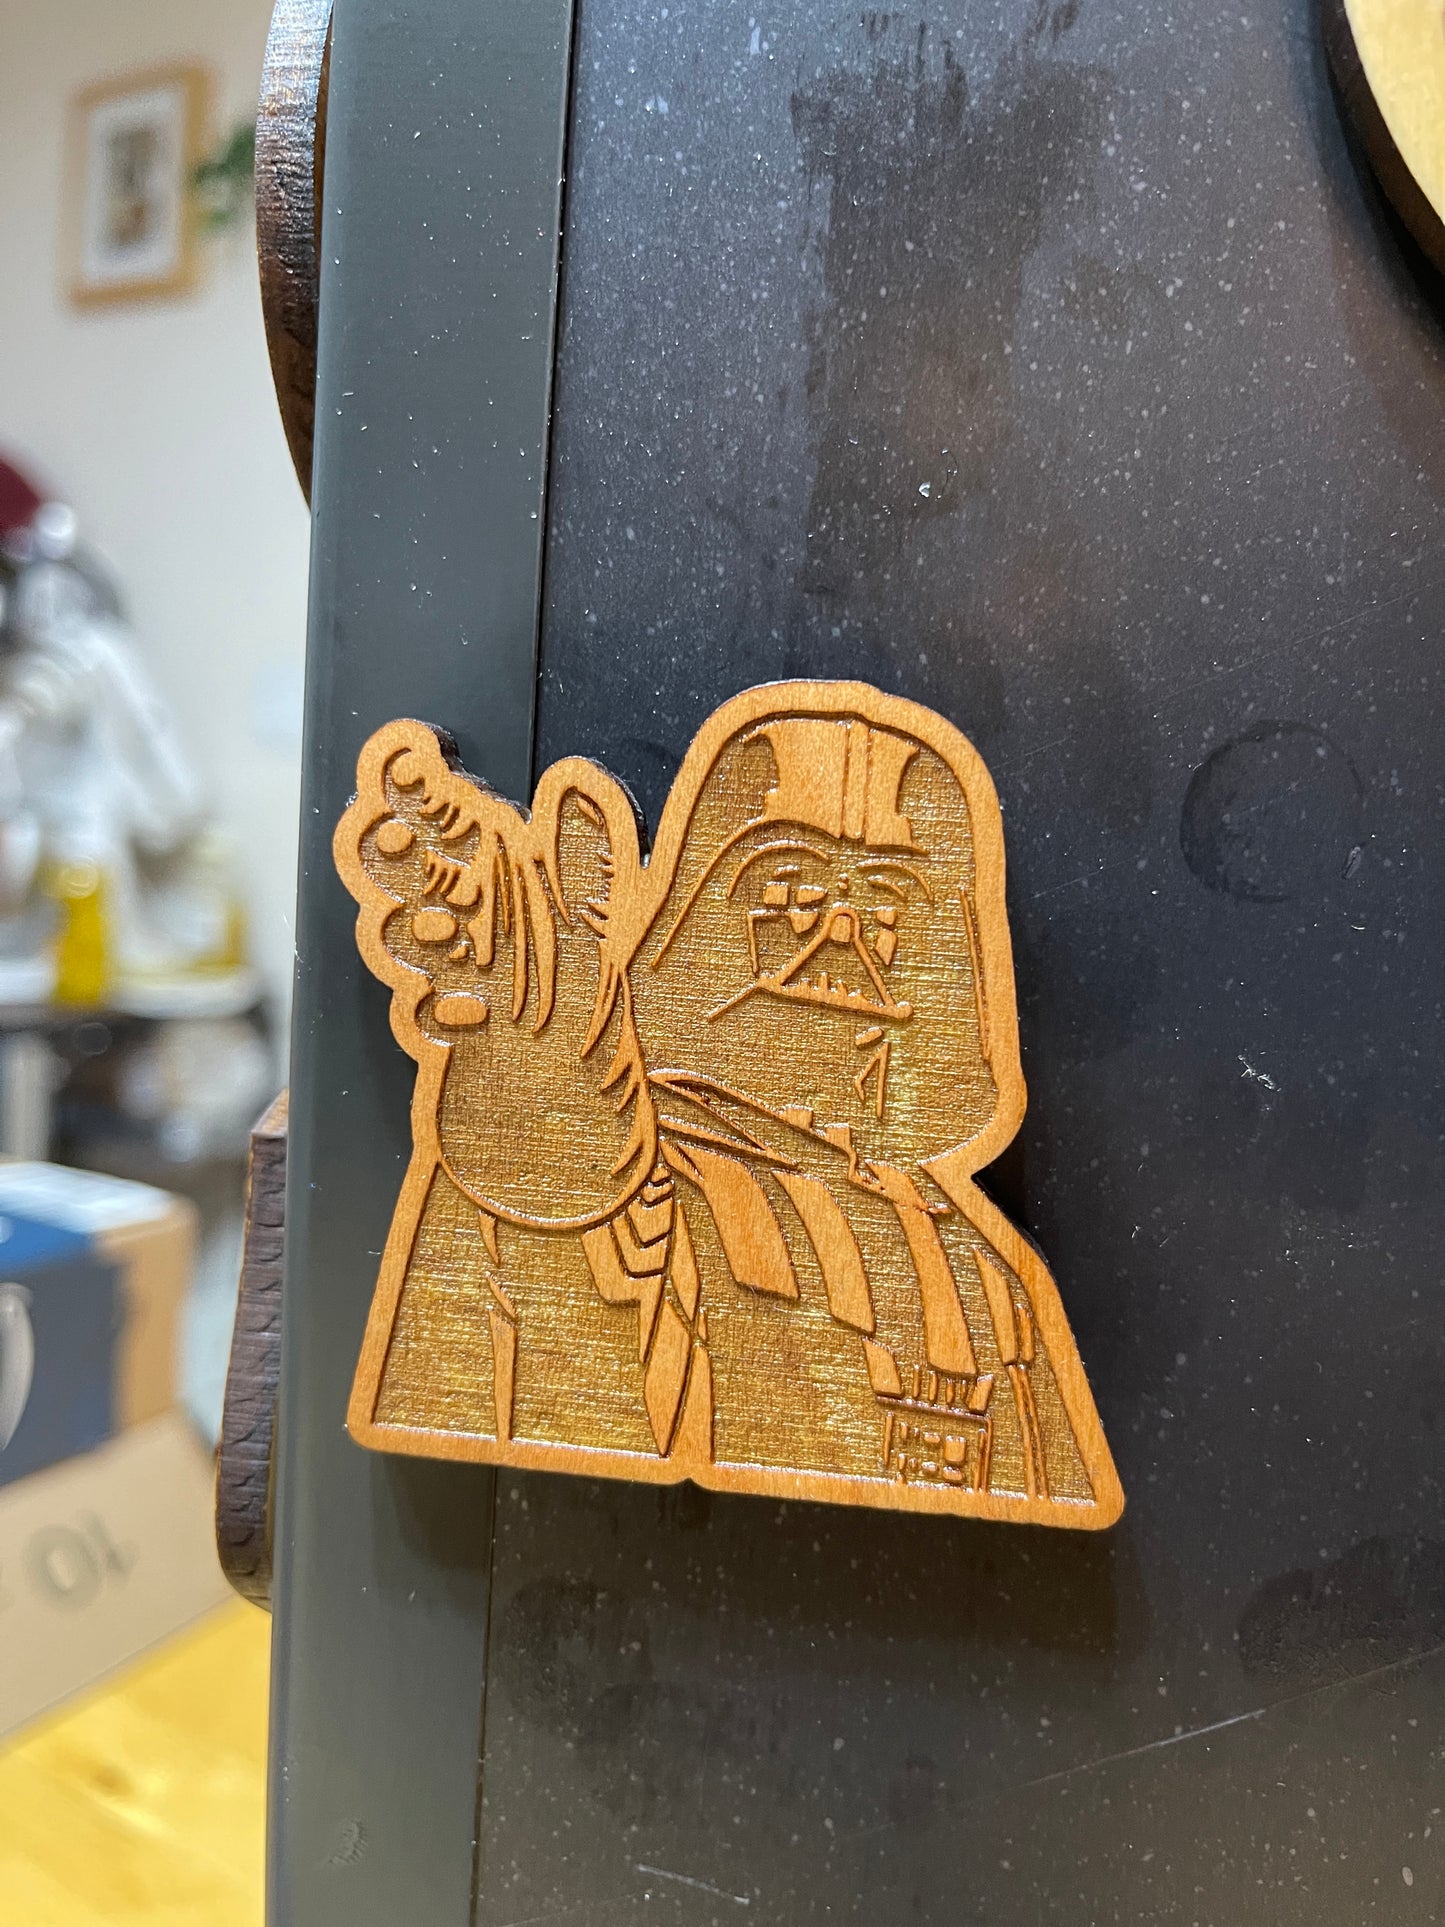 Star Wars fridge magnets